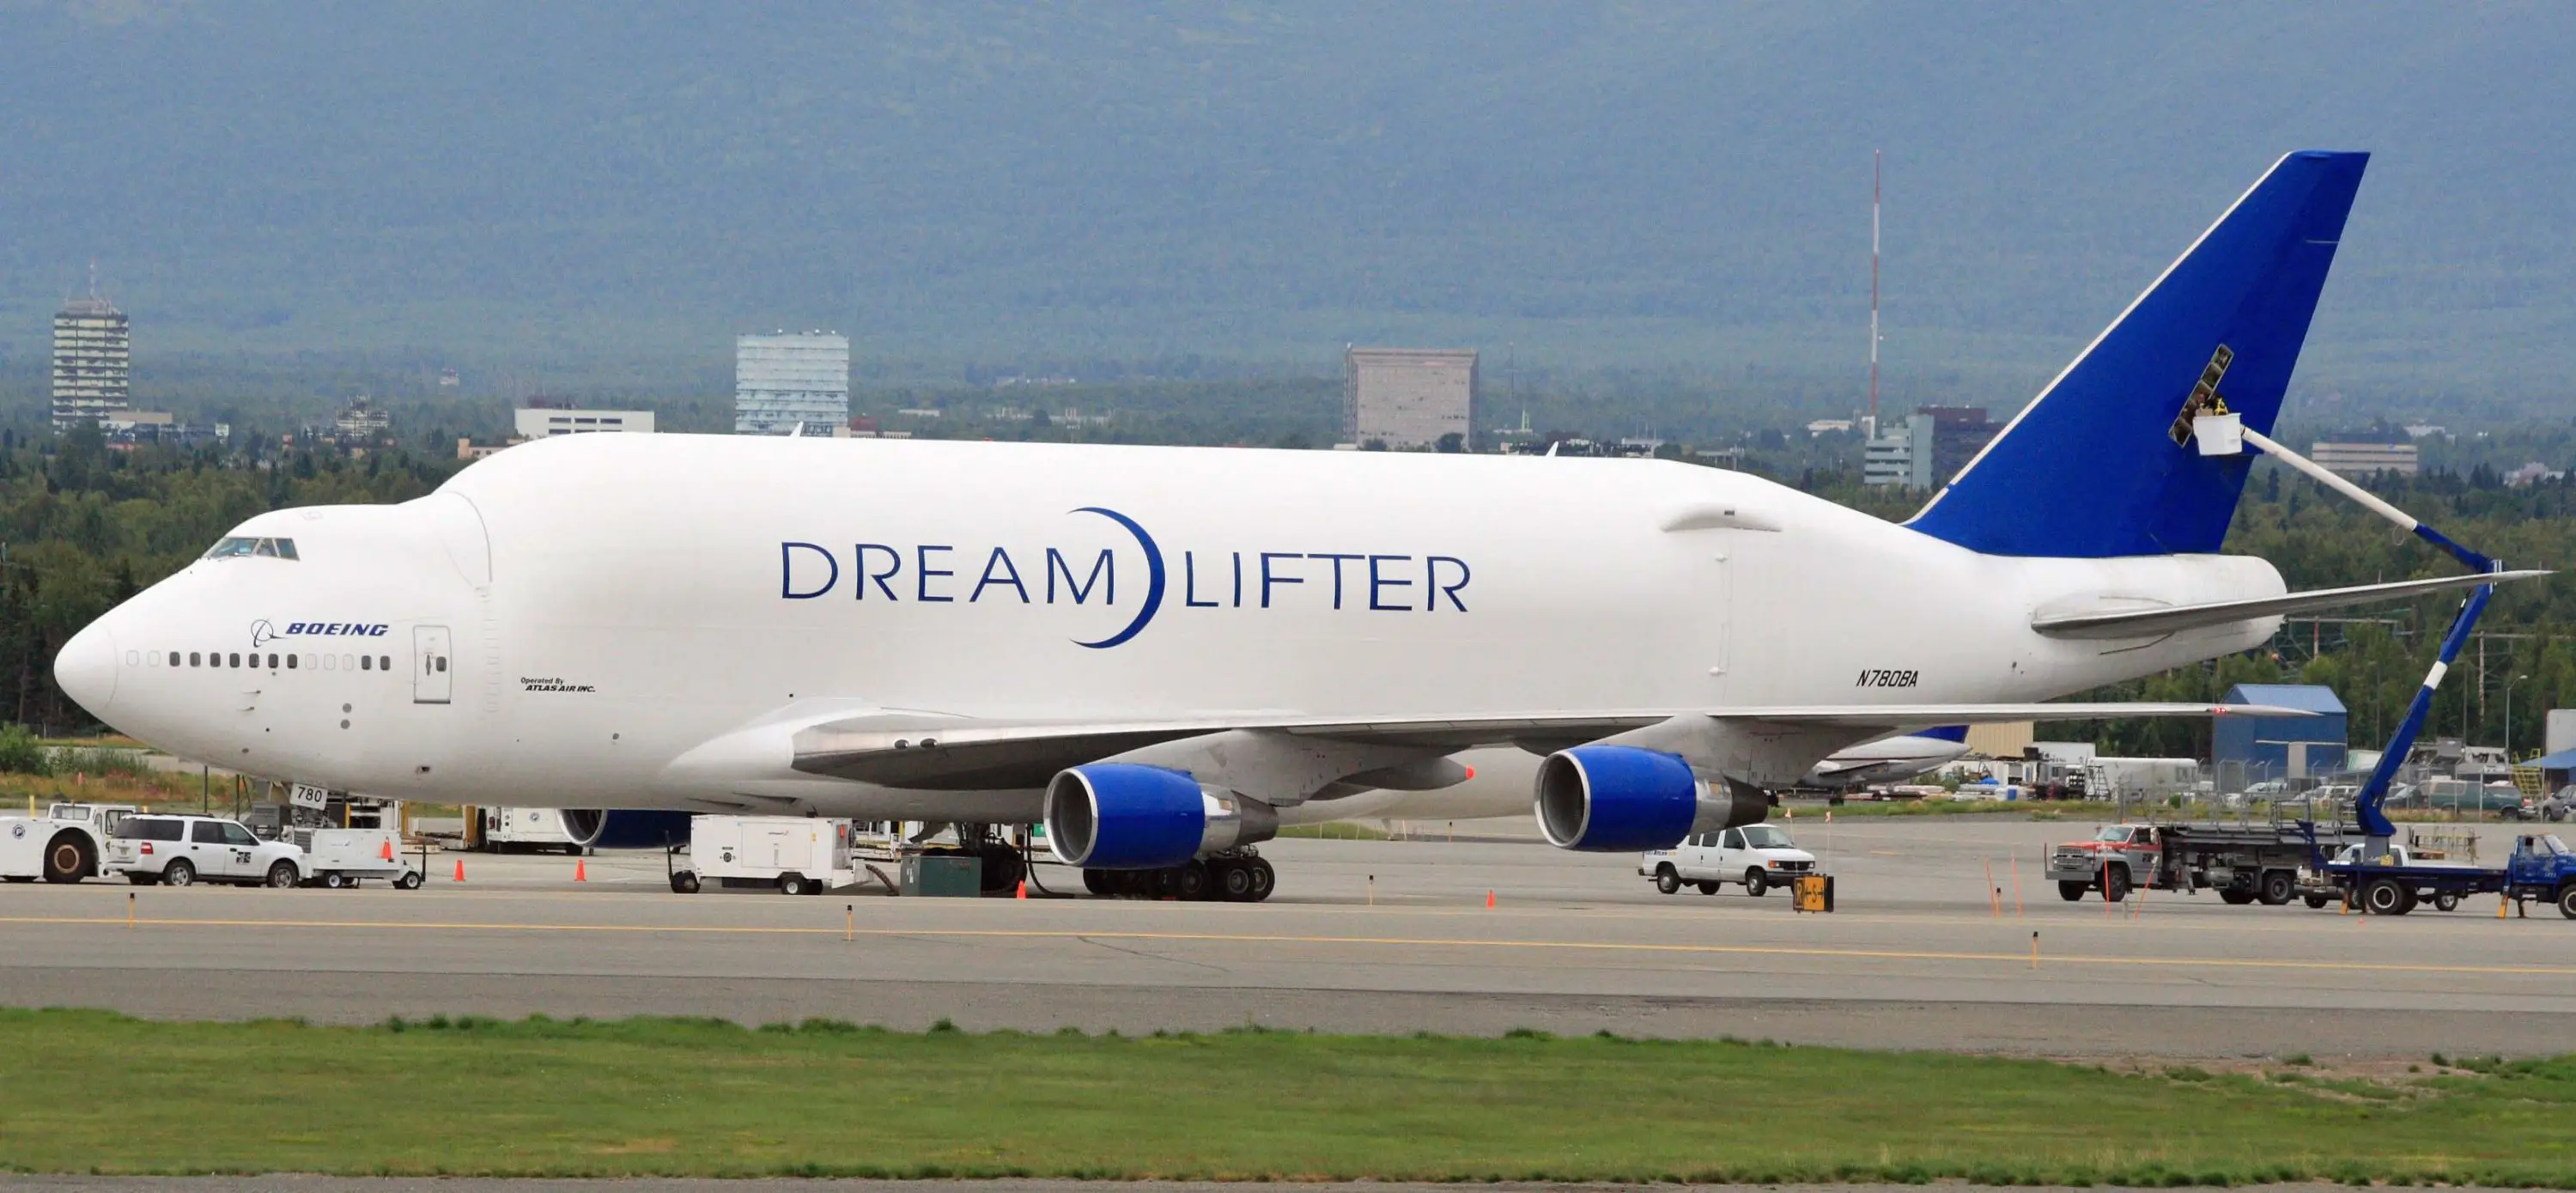 Atlas_Air_747_Dreamlifter_at_ANC-3000x1389.jpg